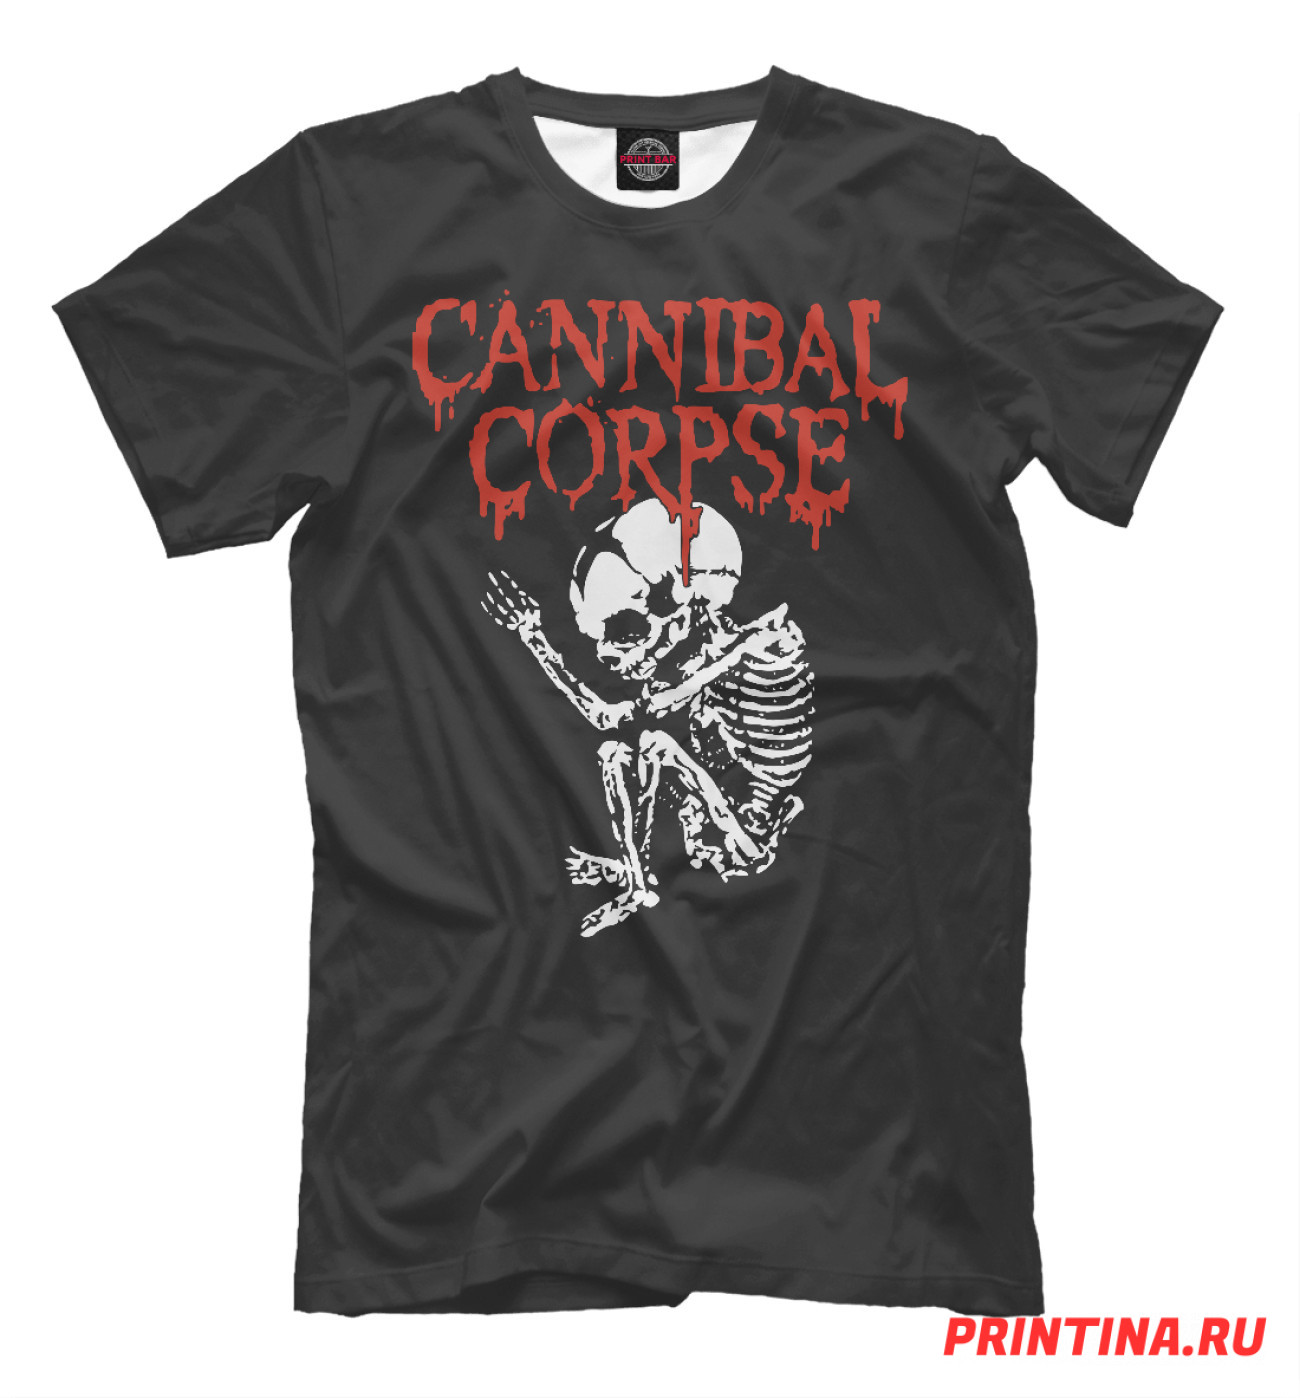 Мужская Футболка Cannibal Corpse, артикул: CCR-850180-fut-2